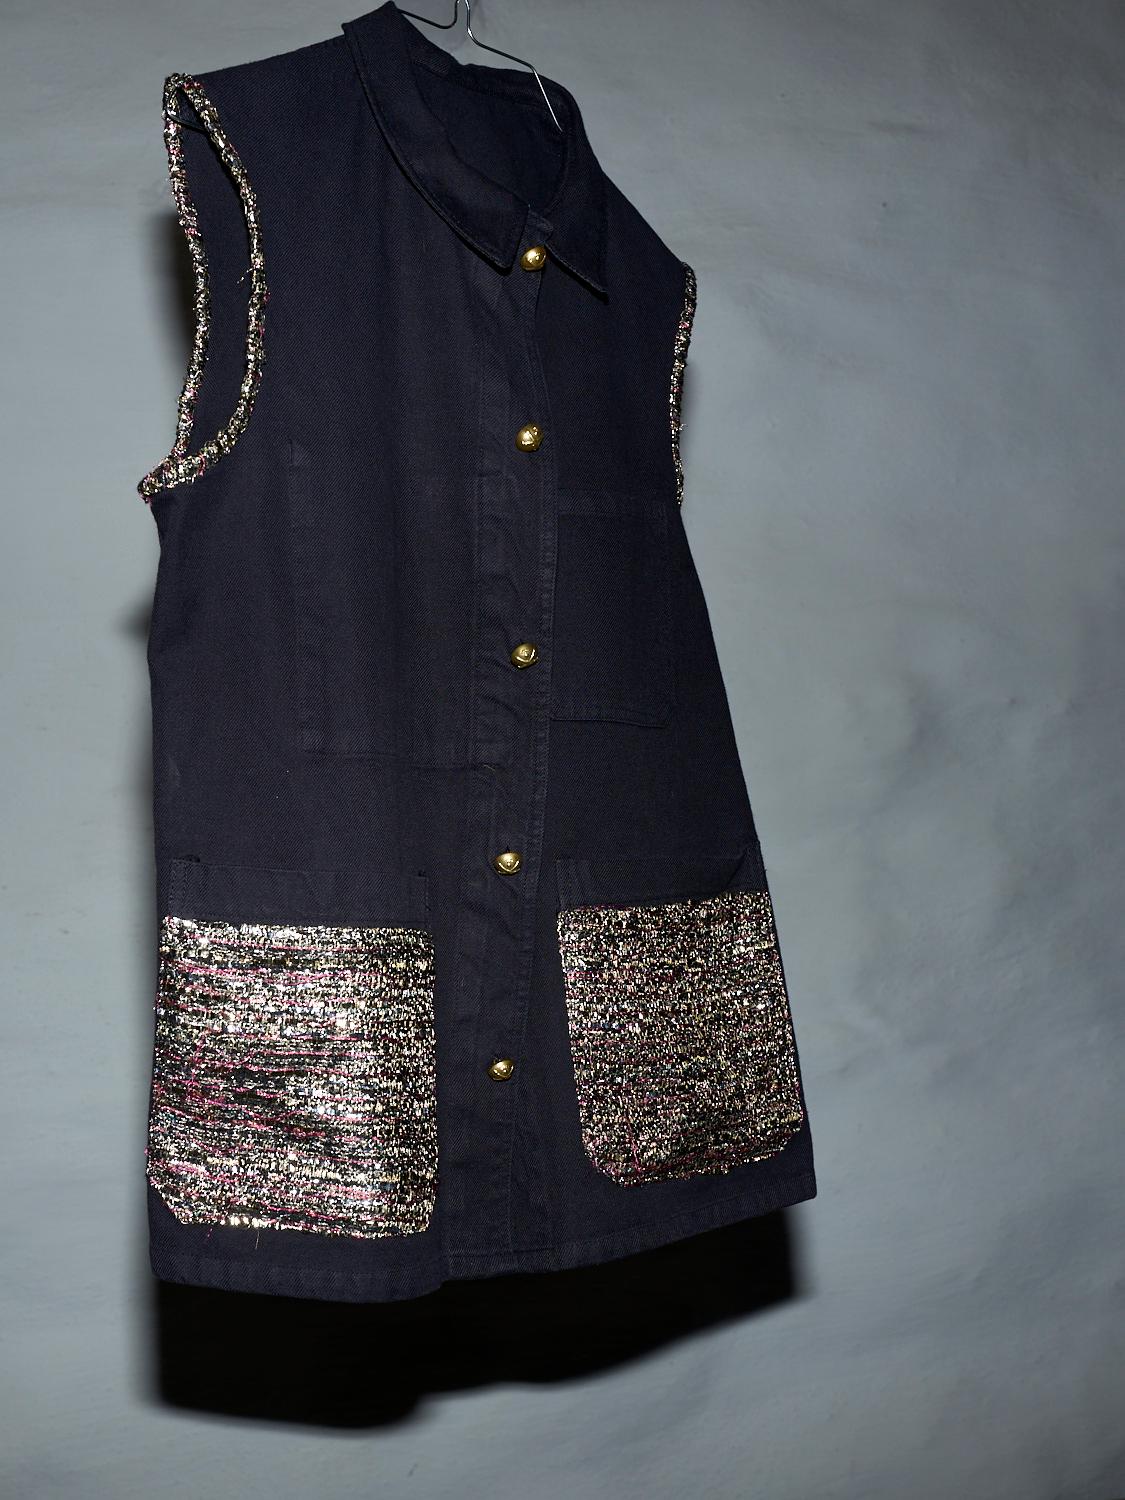 Embellished Sleeveless Jacket Vest Evening Black Gold Tweed Pockets J Dauphin 3